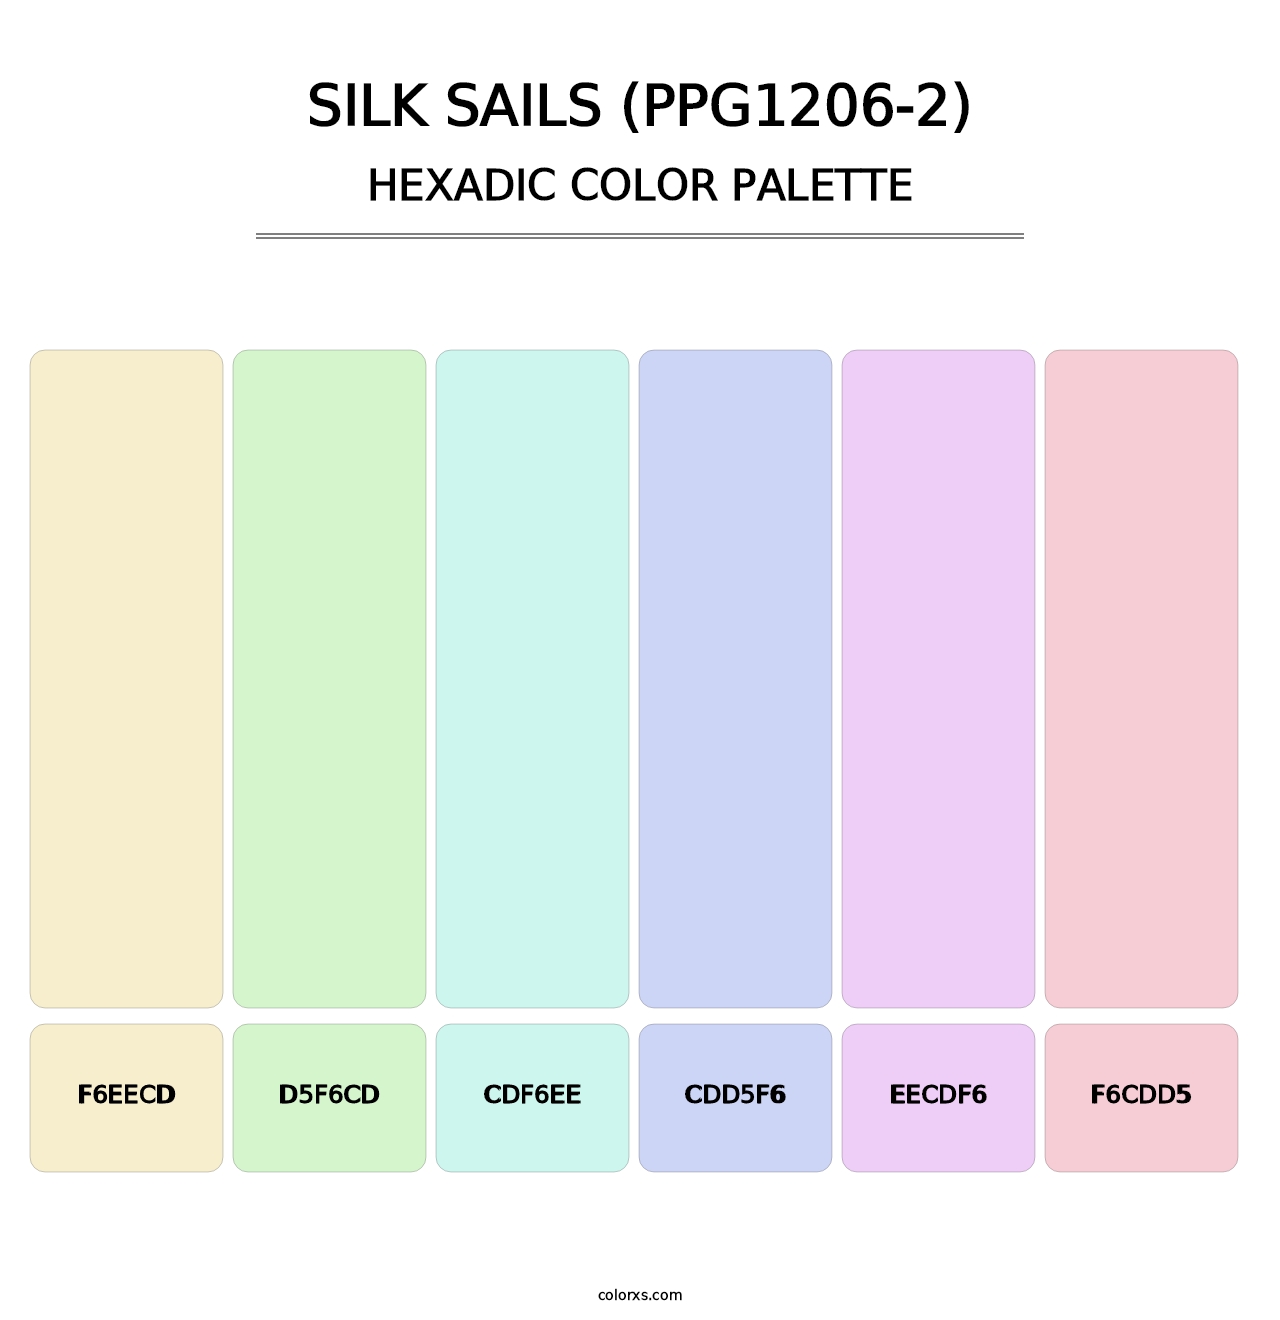 Silk Sails (PPG1206-2) - Hexadic Color Palette